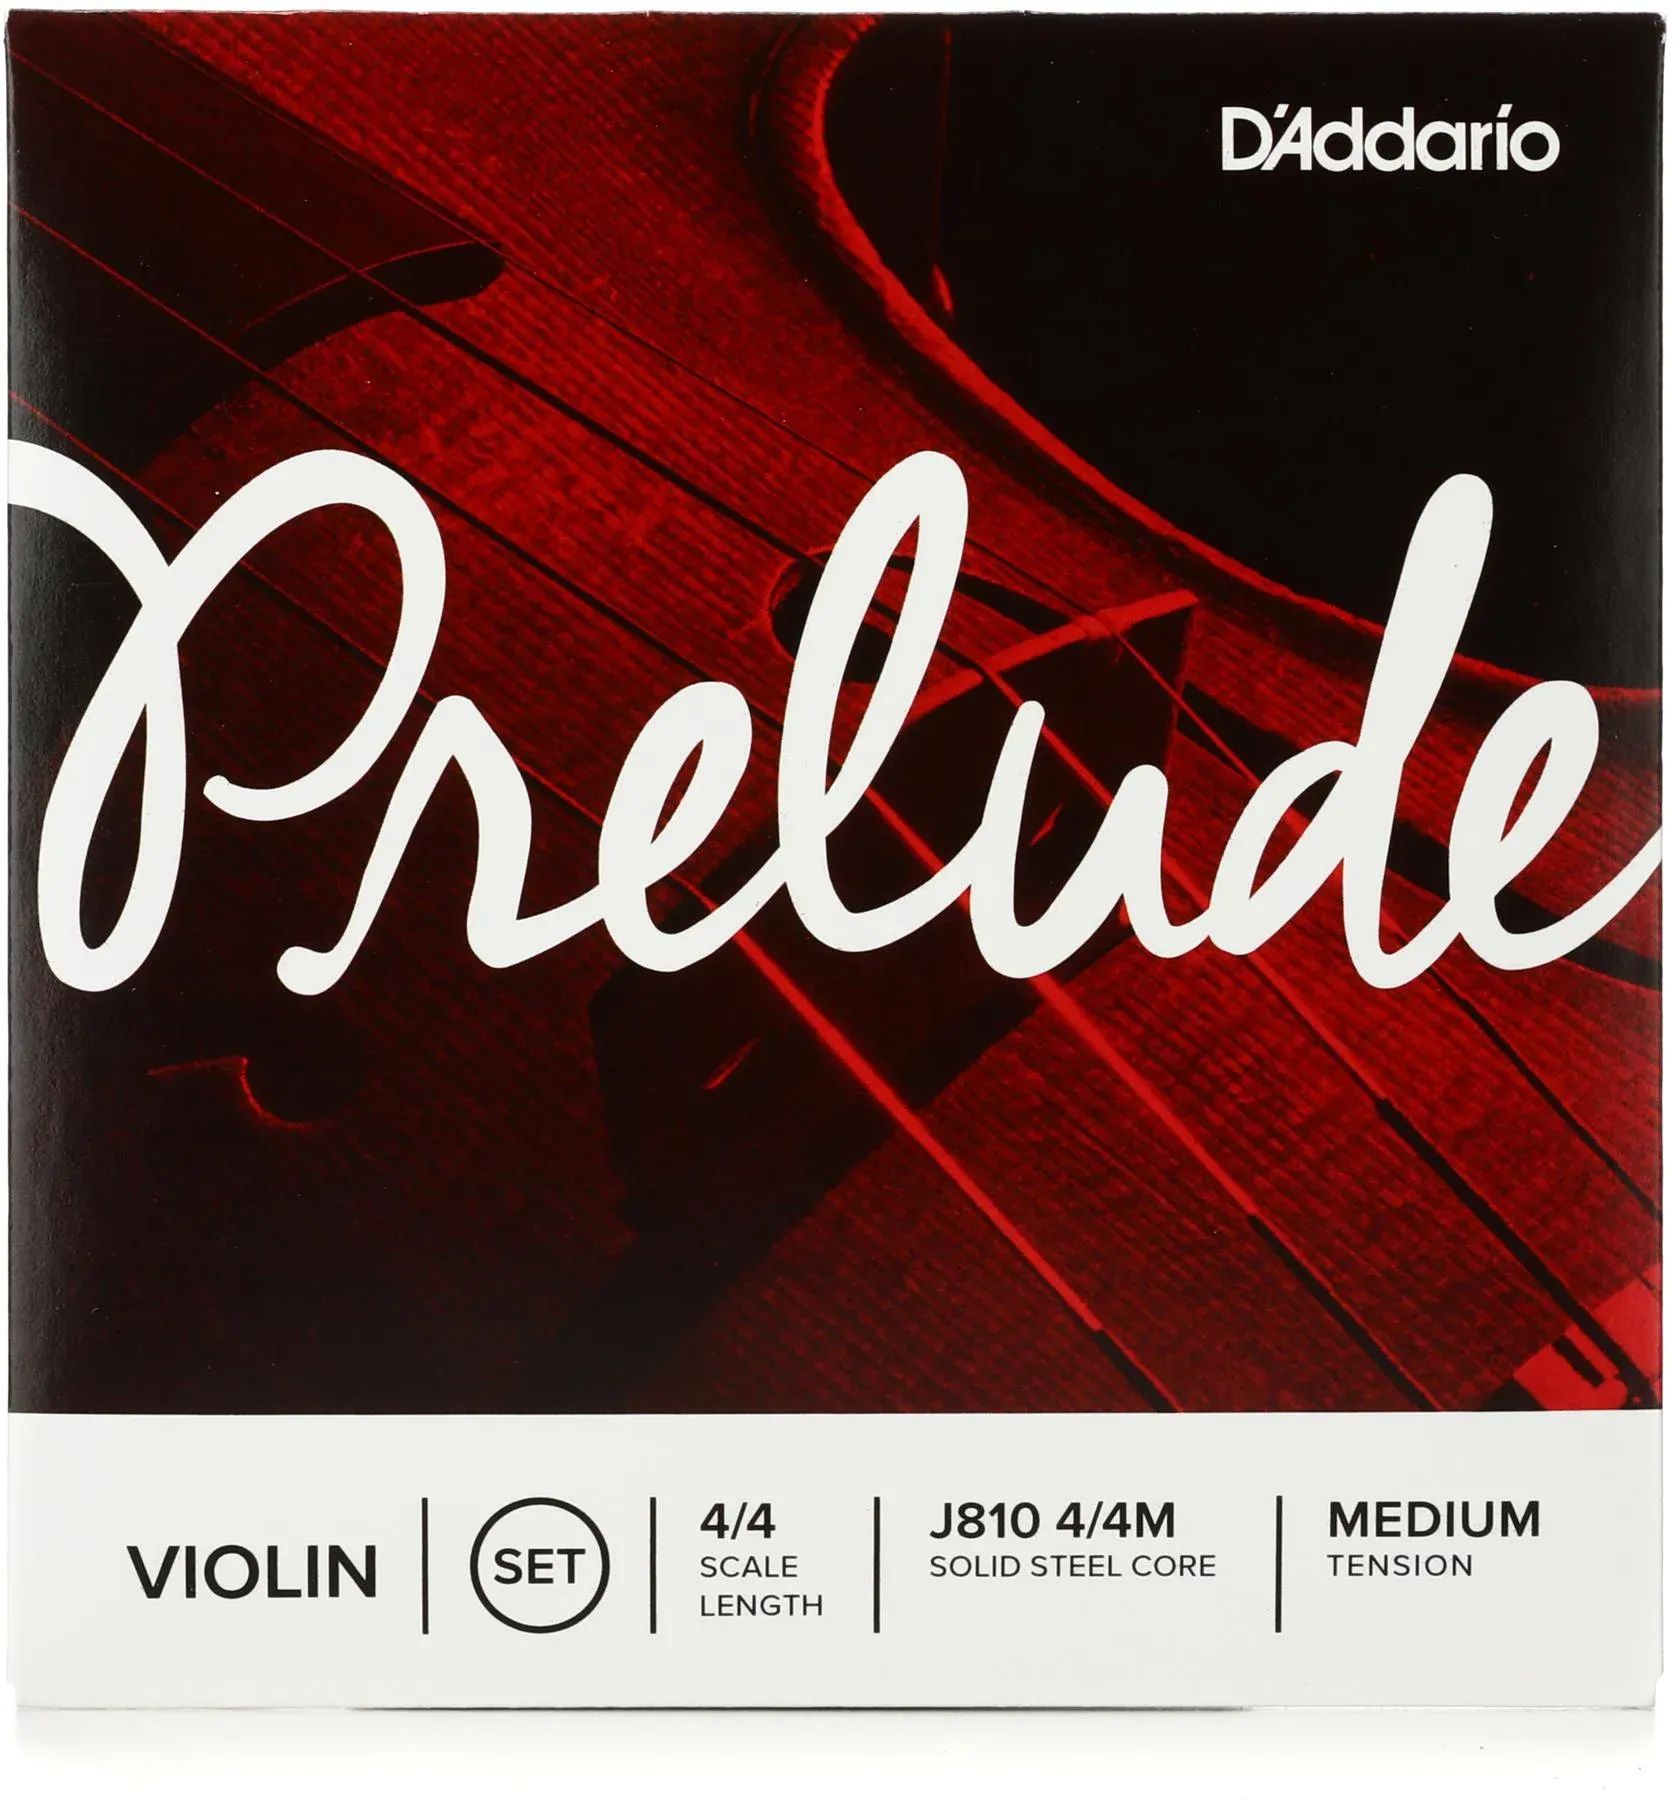 Over j. Струны дадарио для скрипки. D'Addario j811. Струны для скрипки d’Addario Prelude 1/2 j810-1/2m (набор). D'Addario струны для скрипки.